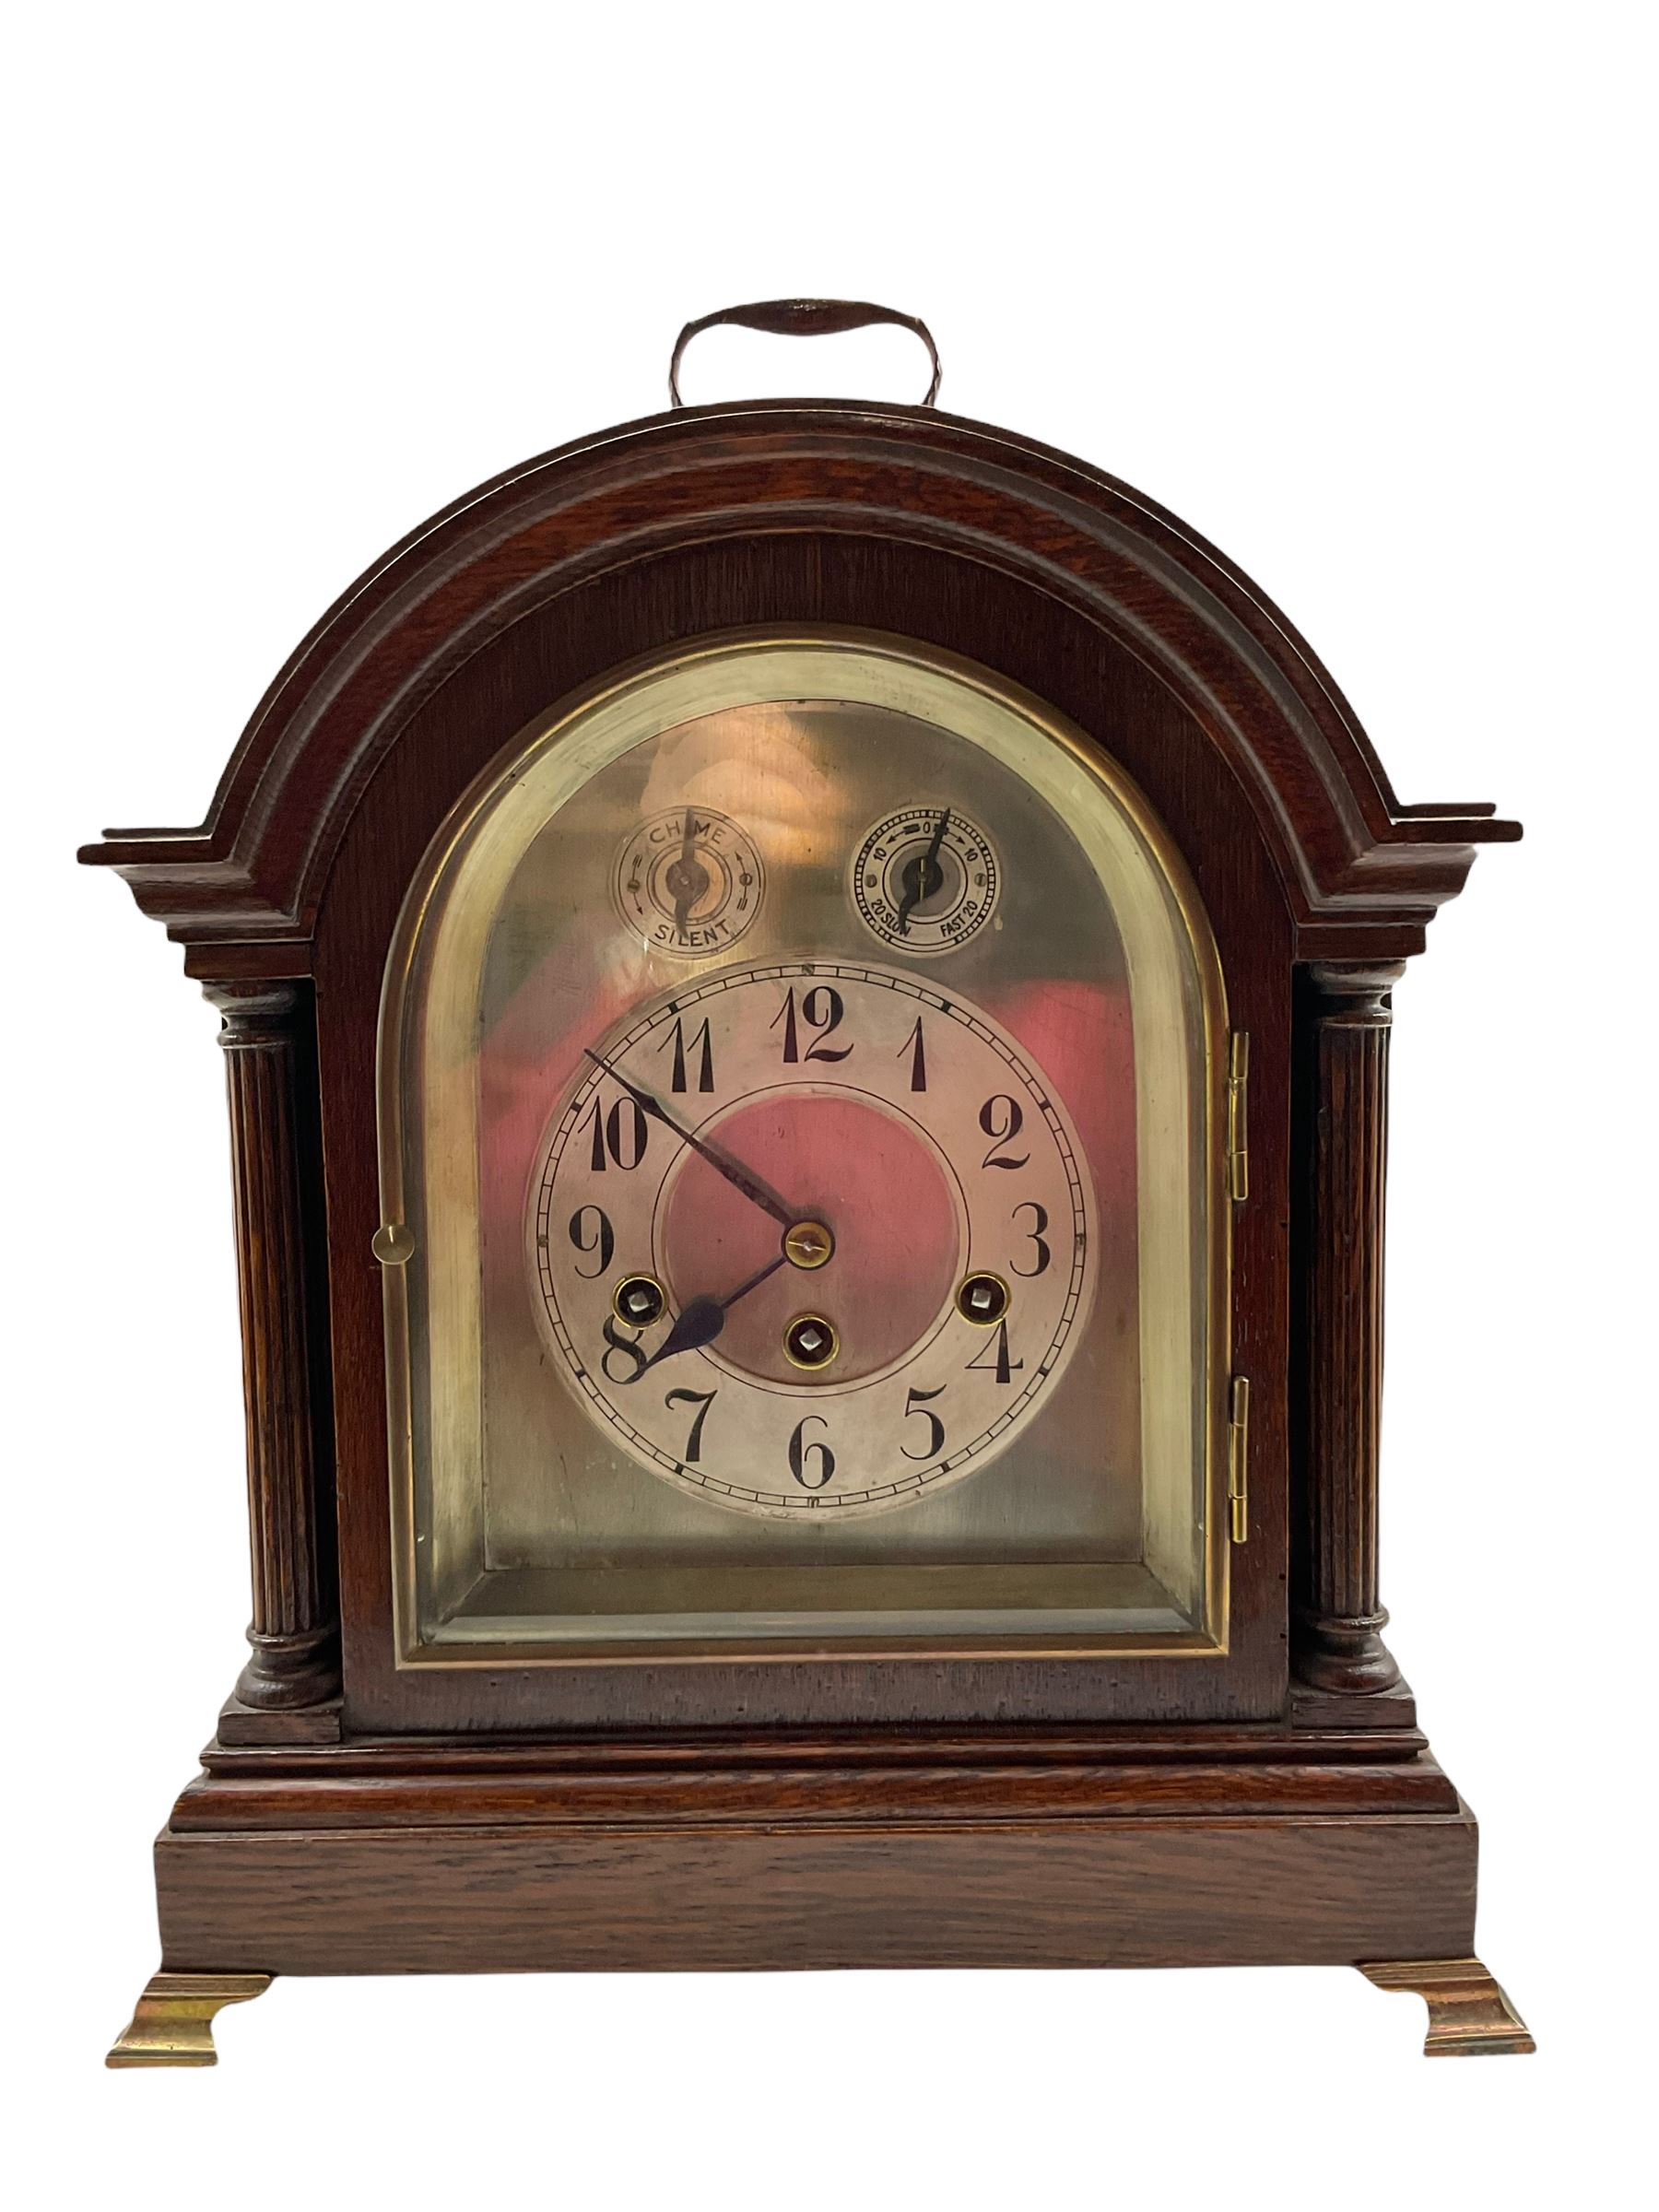 A German "Junghans" Westminster chiming mantle clock c1910